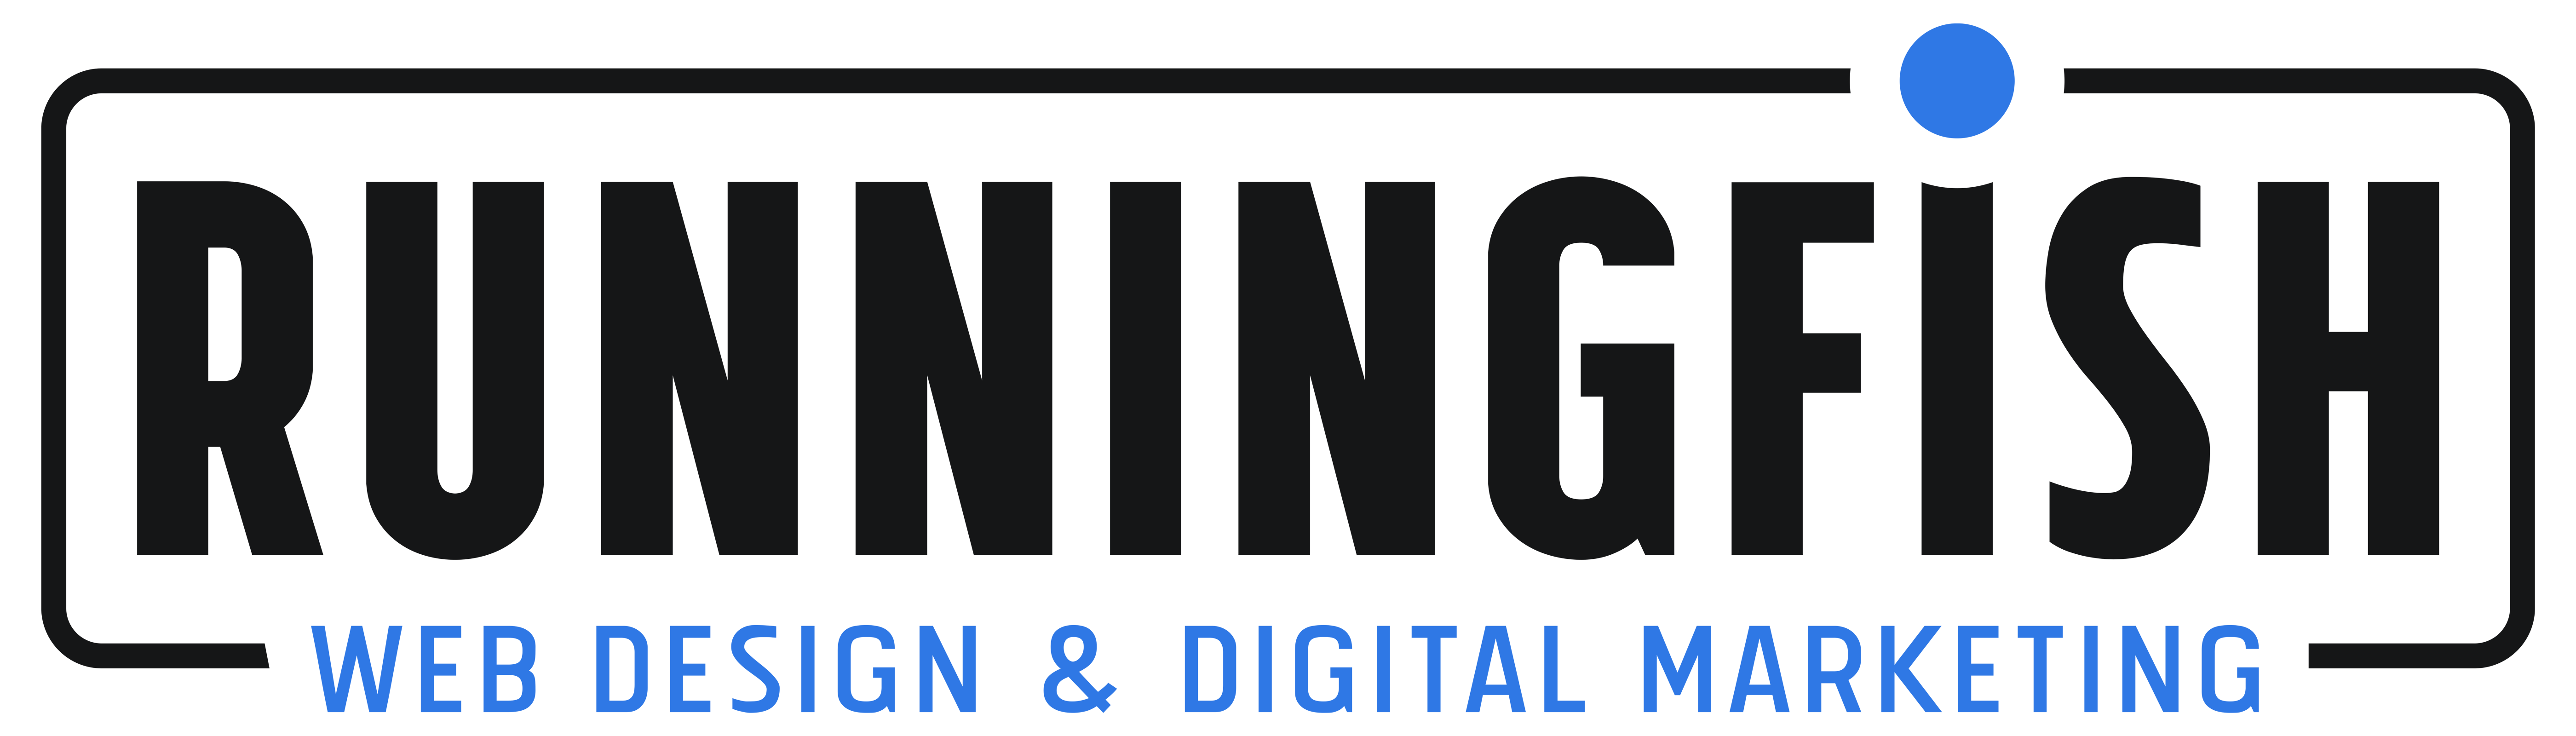 Runningfish Web Design and Digital Marketing Logo